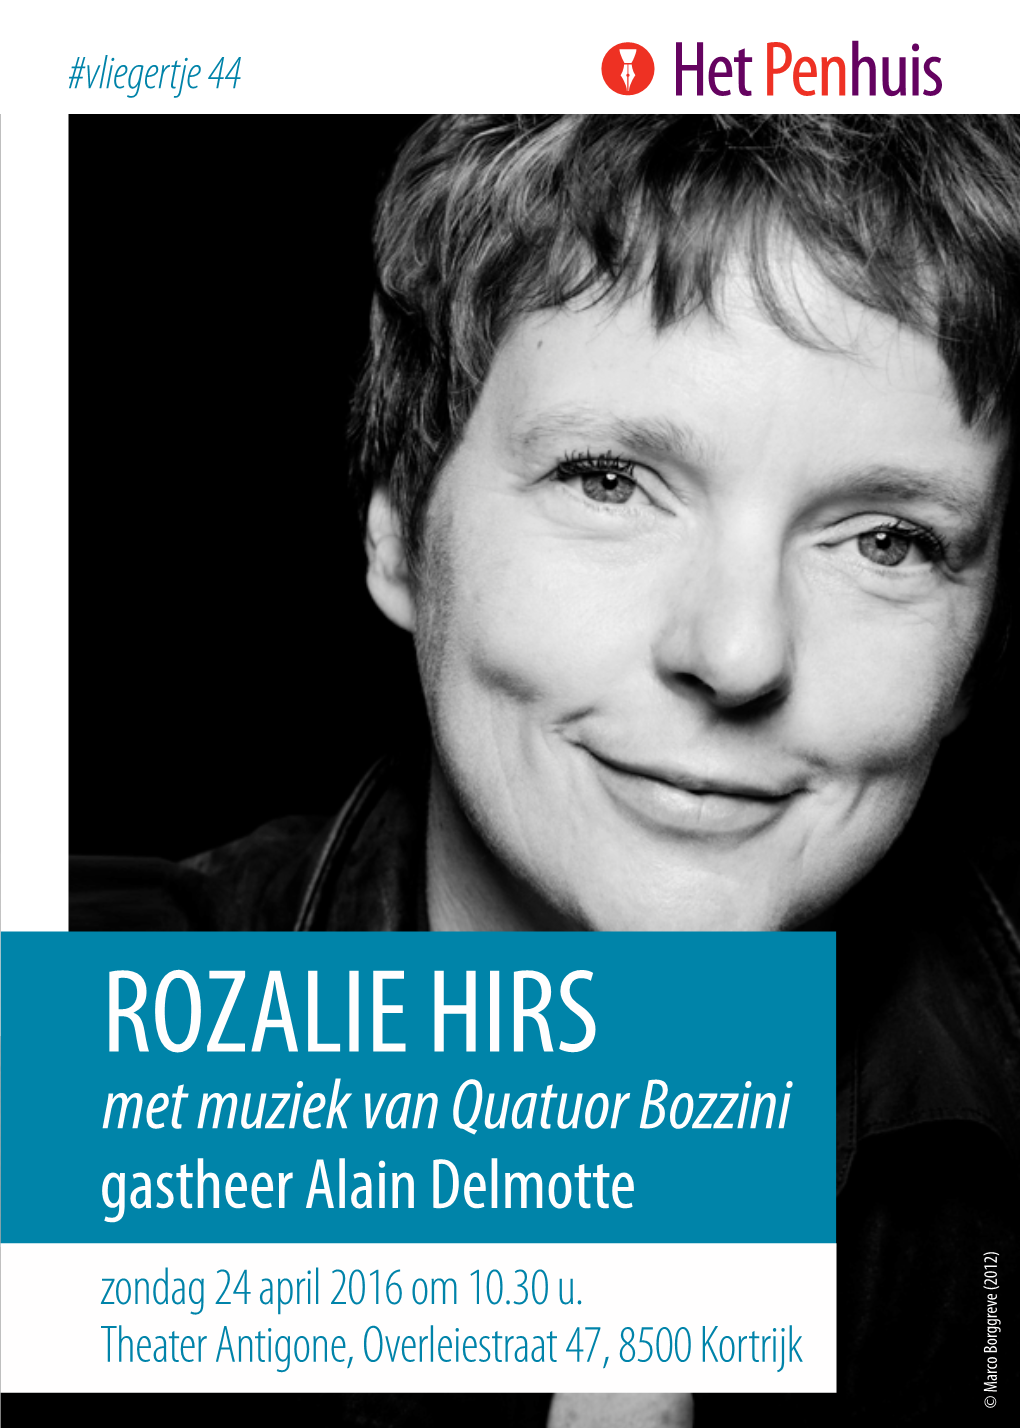 ROZALIE HIRS Met Muziek Van Quatuor Bozzini Gastheer Alain Delmotte Zondag 24 April 2016 Om 10.30 U